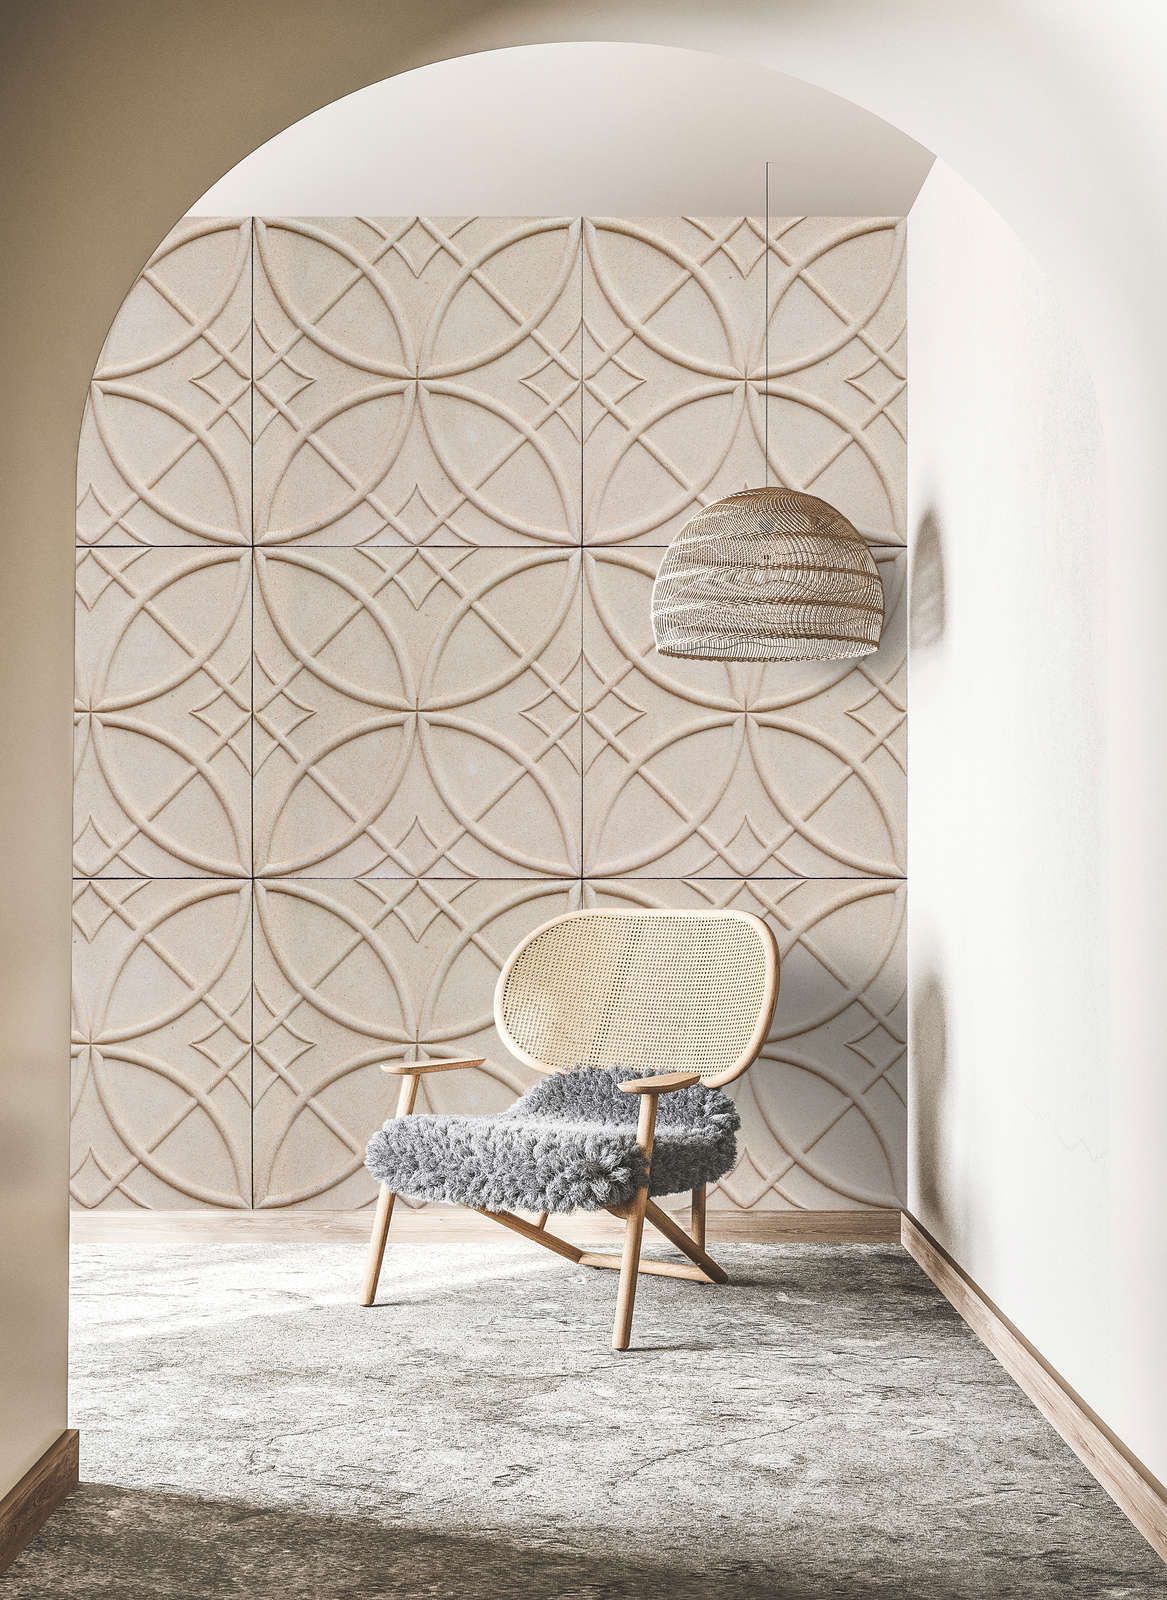             Photo wallpaper »circulus« - Circular pattern on tile look with 3D effect - Matt, smooth non-woven fabric
        